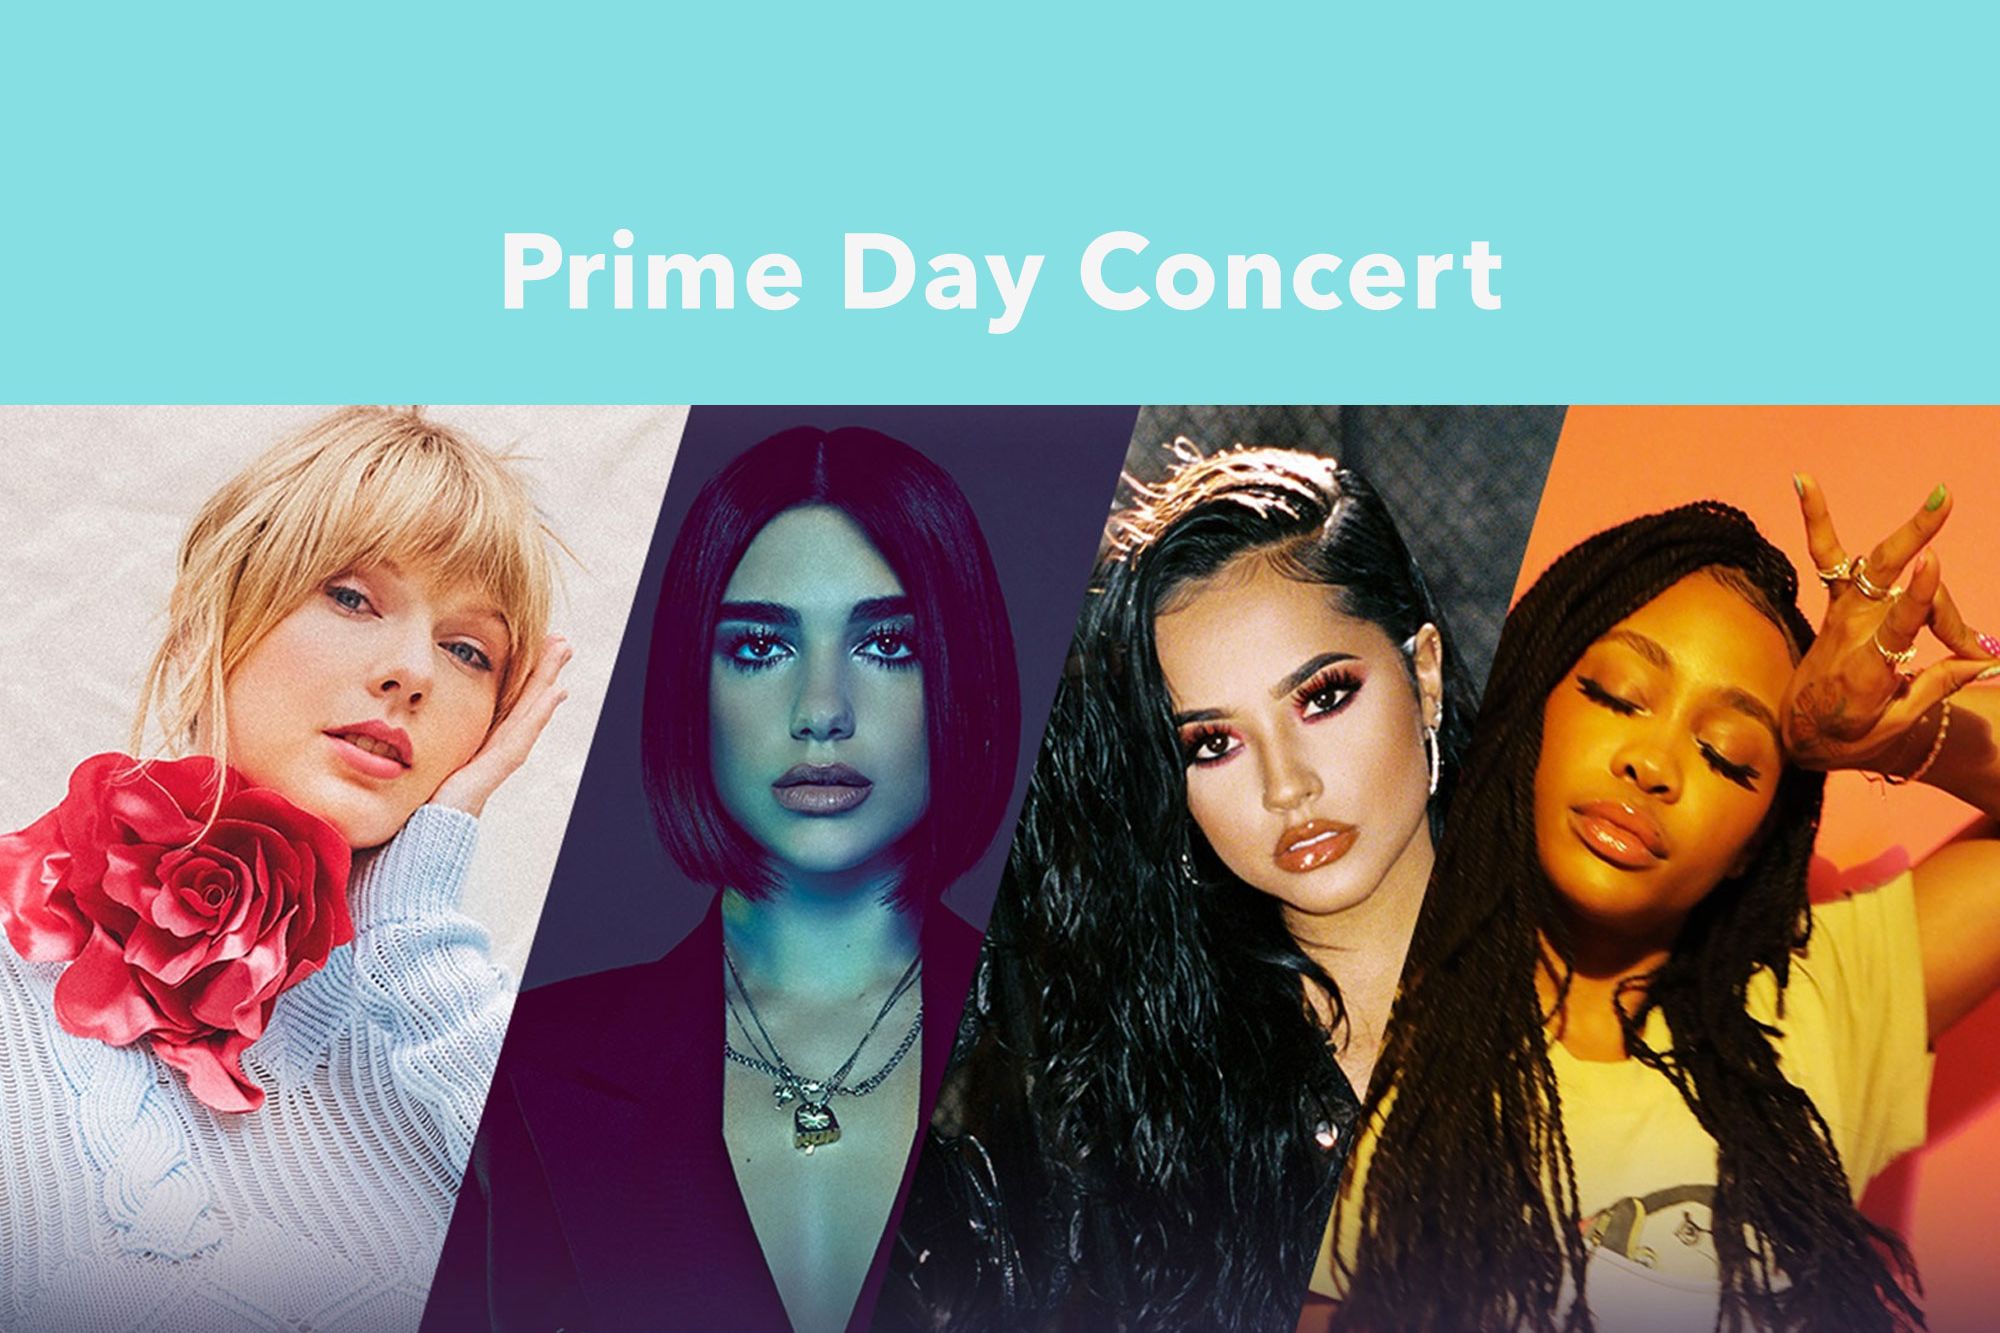 Prime Day Concert Amazon Prime Day 2019 Deals